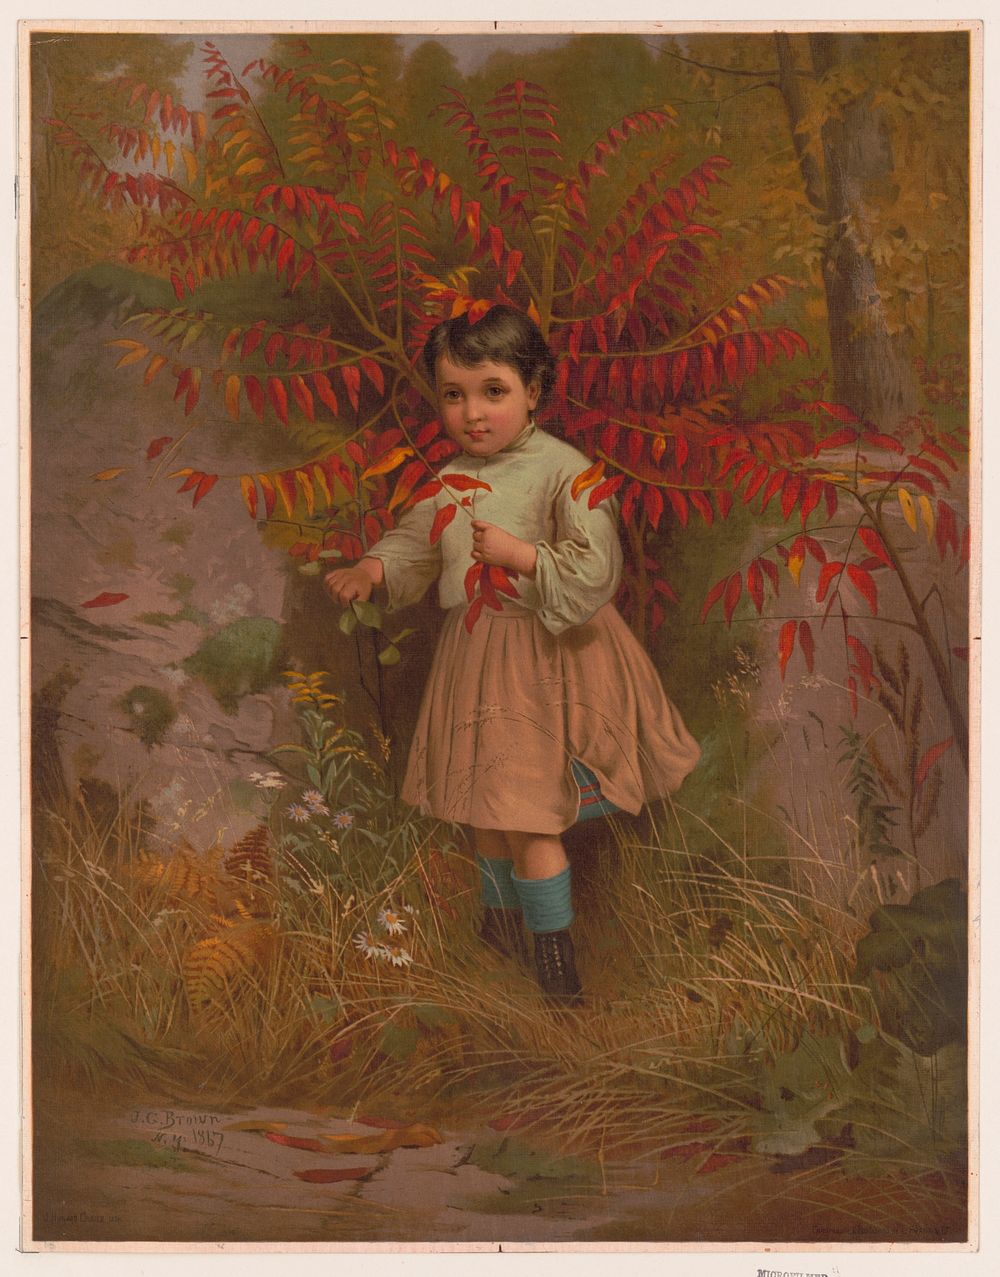 Little Bo Peep  J.G. Brown ; J. Howard Collier lith. (1867) by Brown, John George